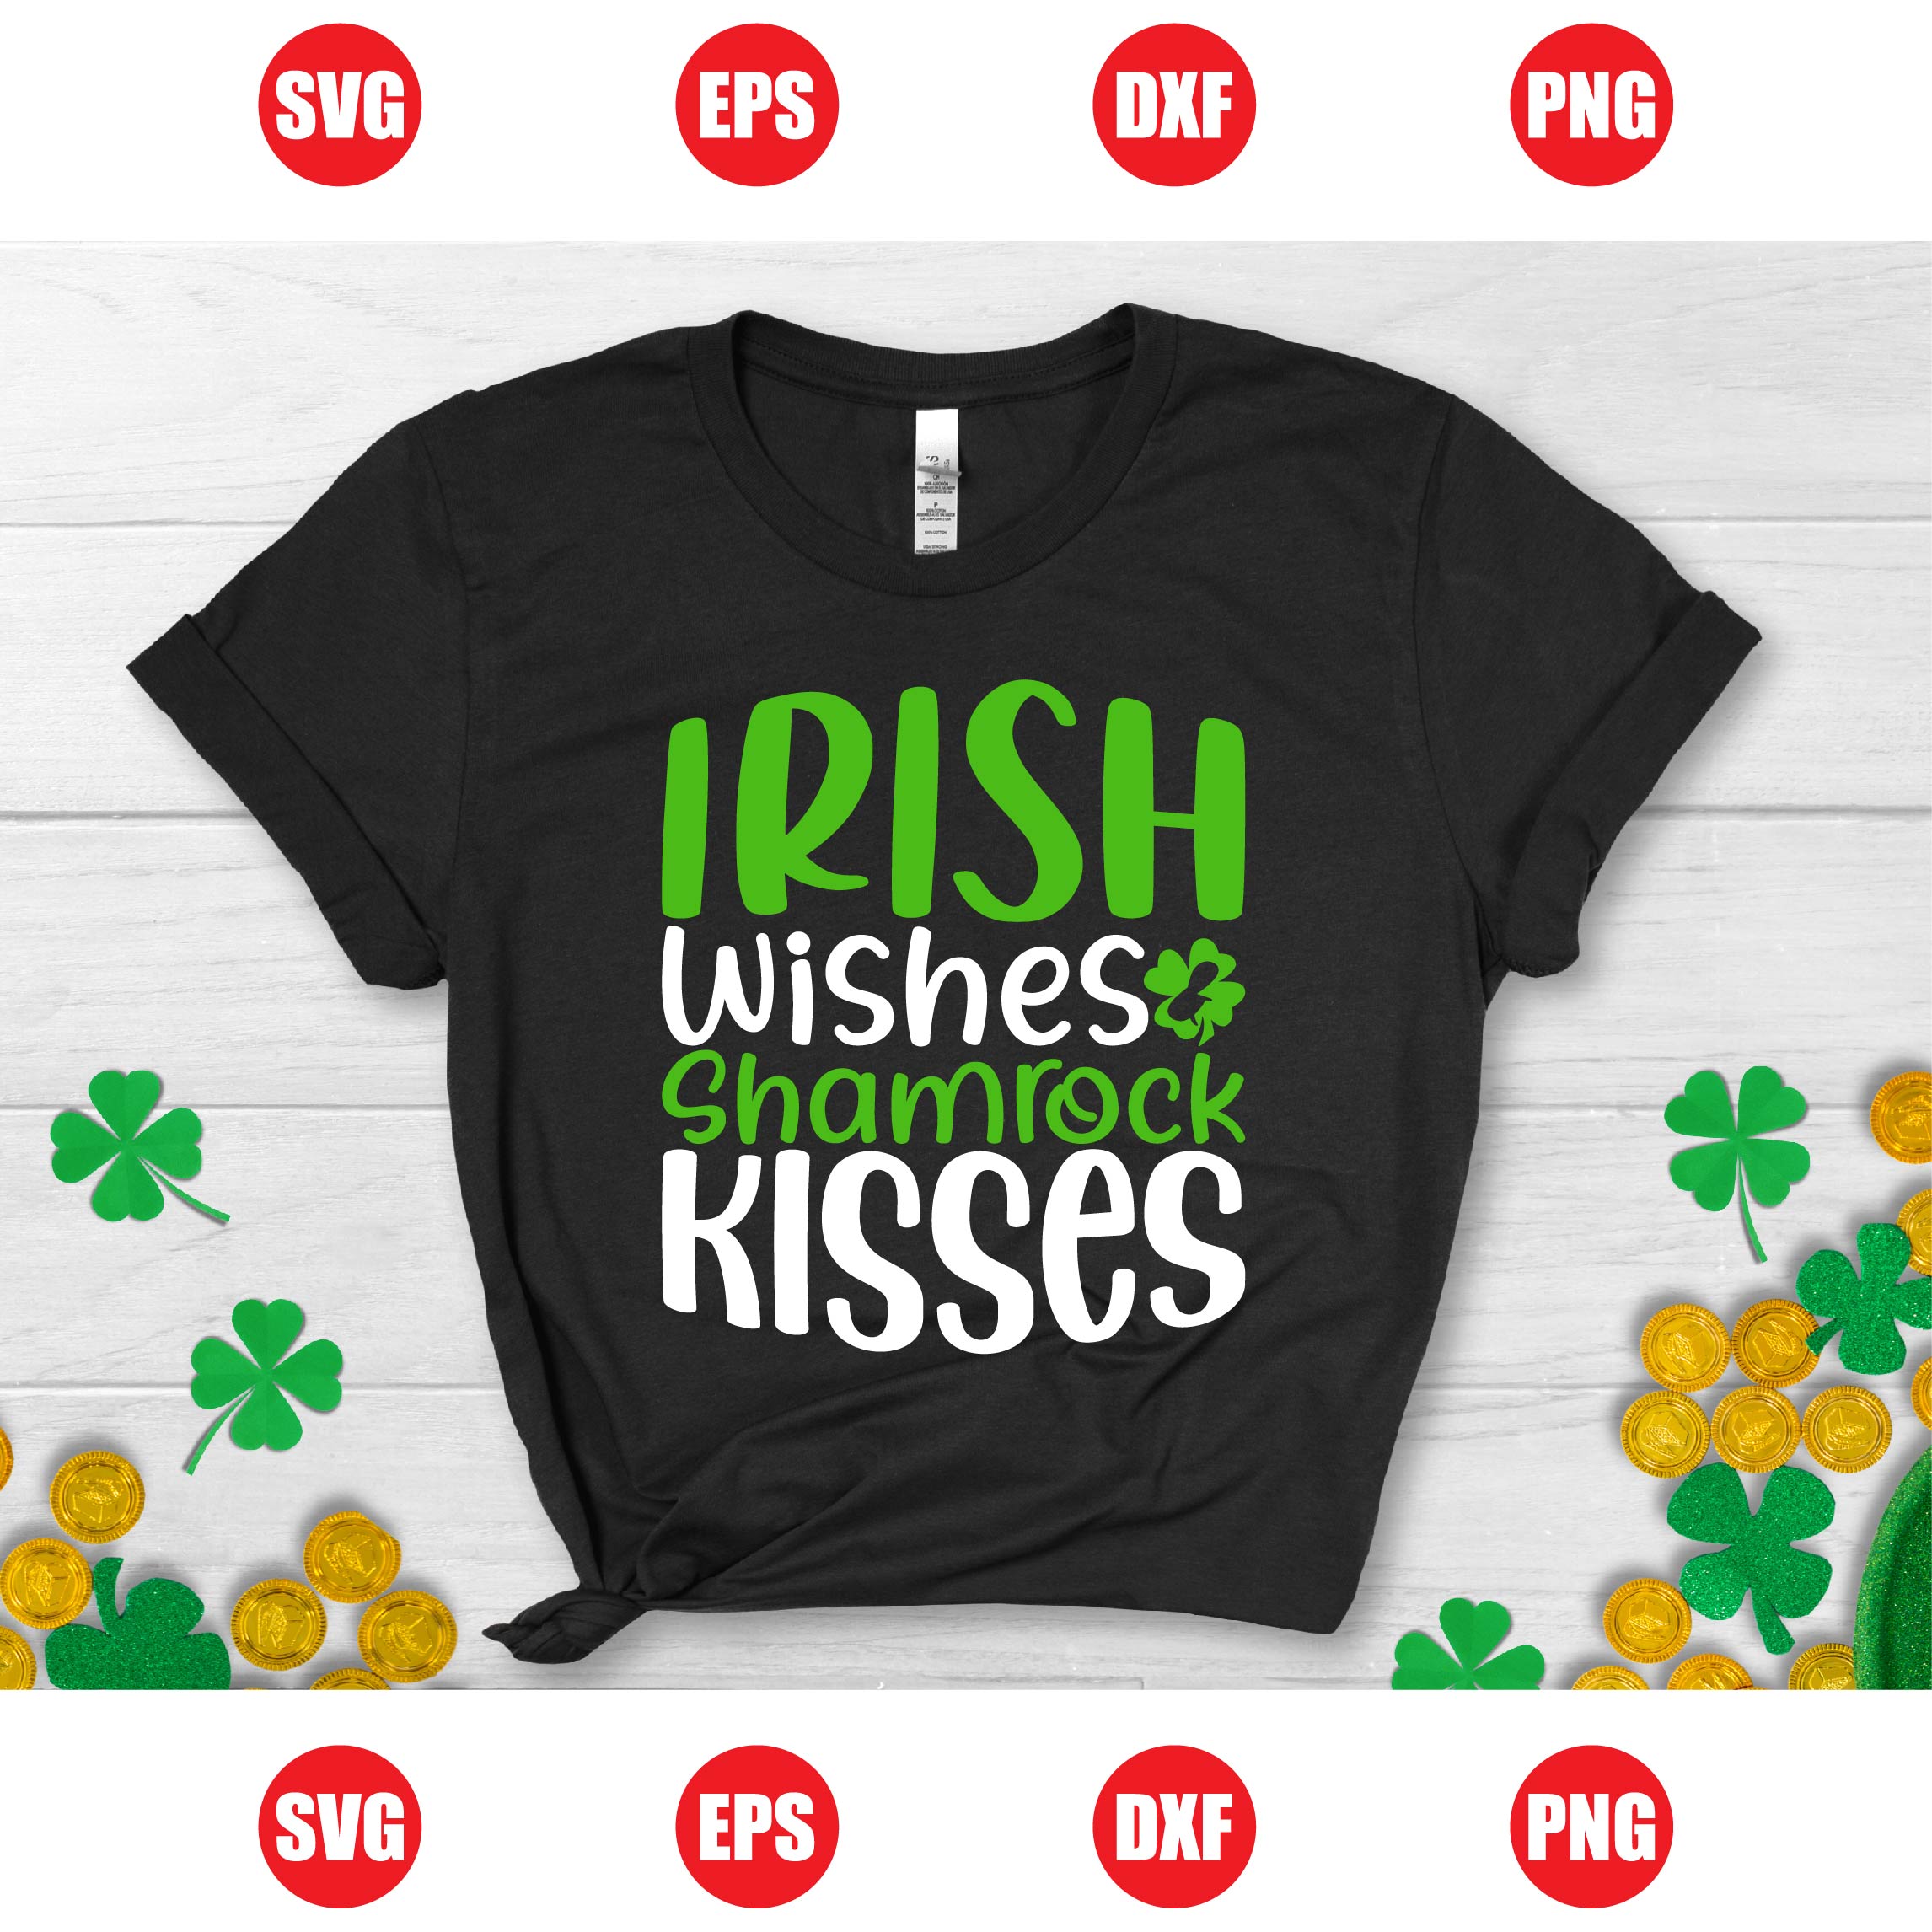 Irish Wishes & Shamrock Kisses T-shirt Design pinterest preview image.